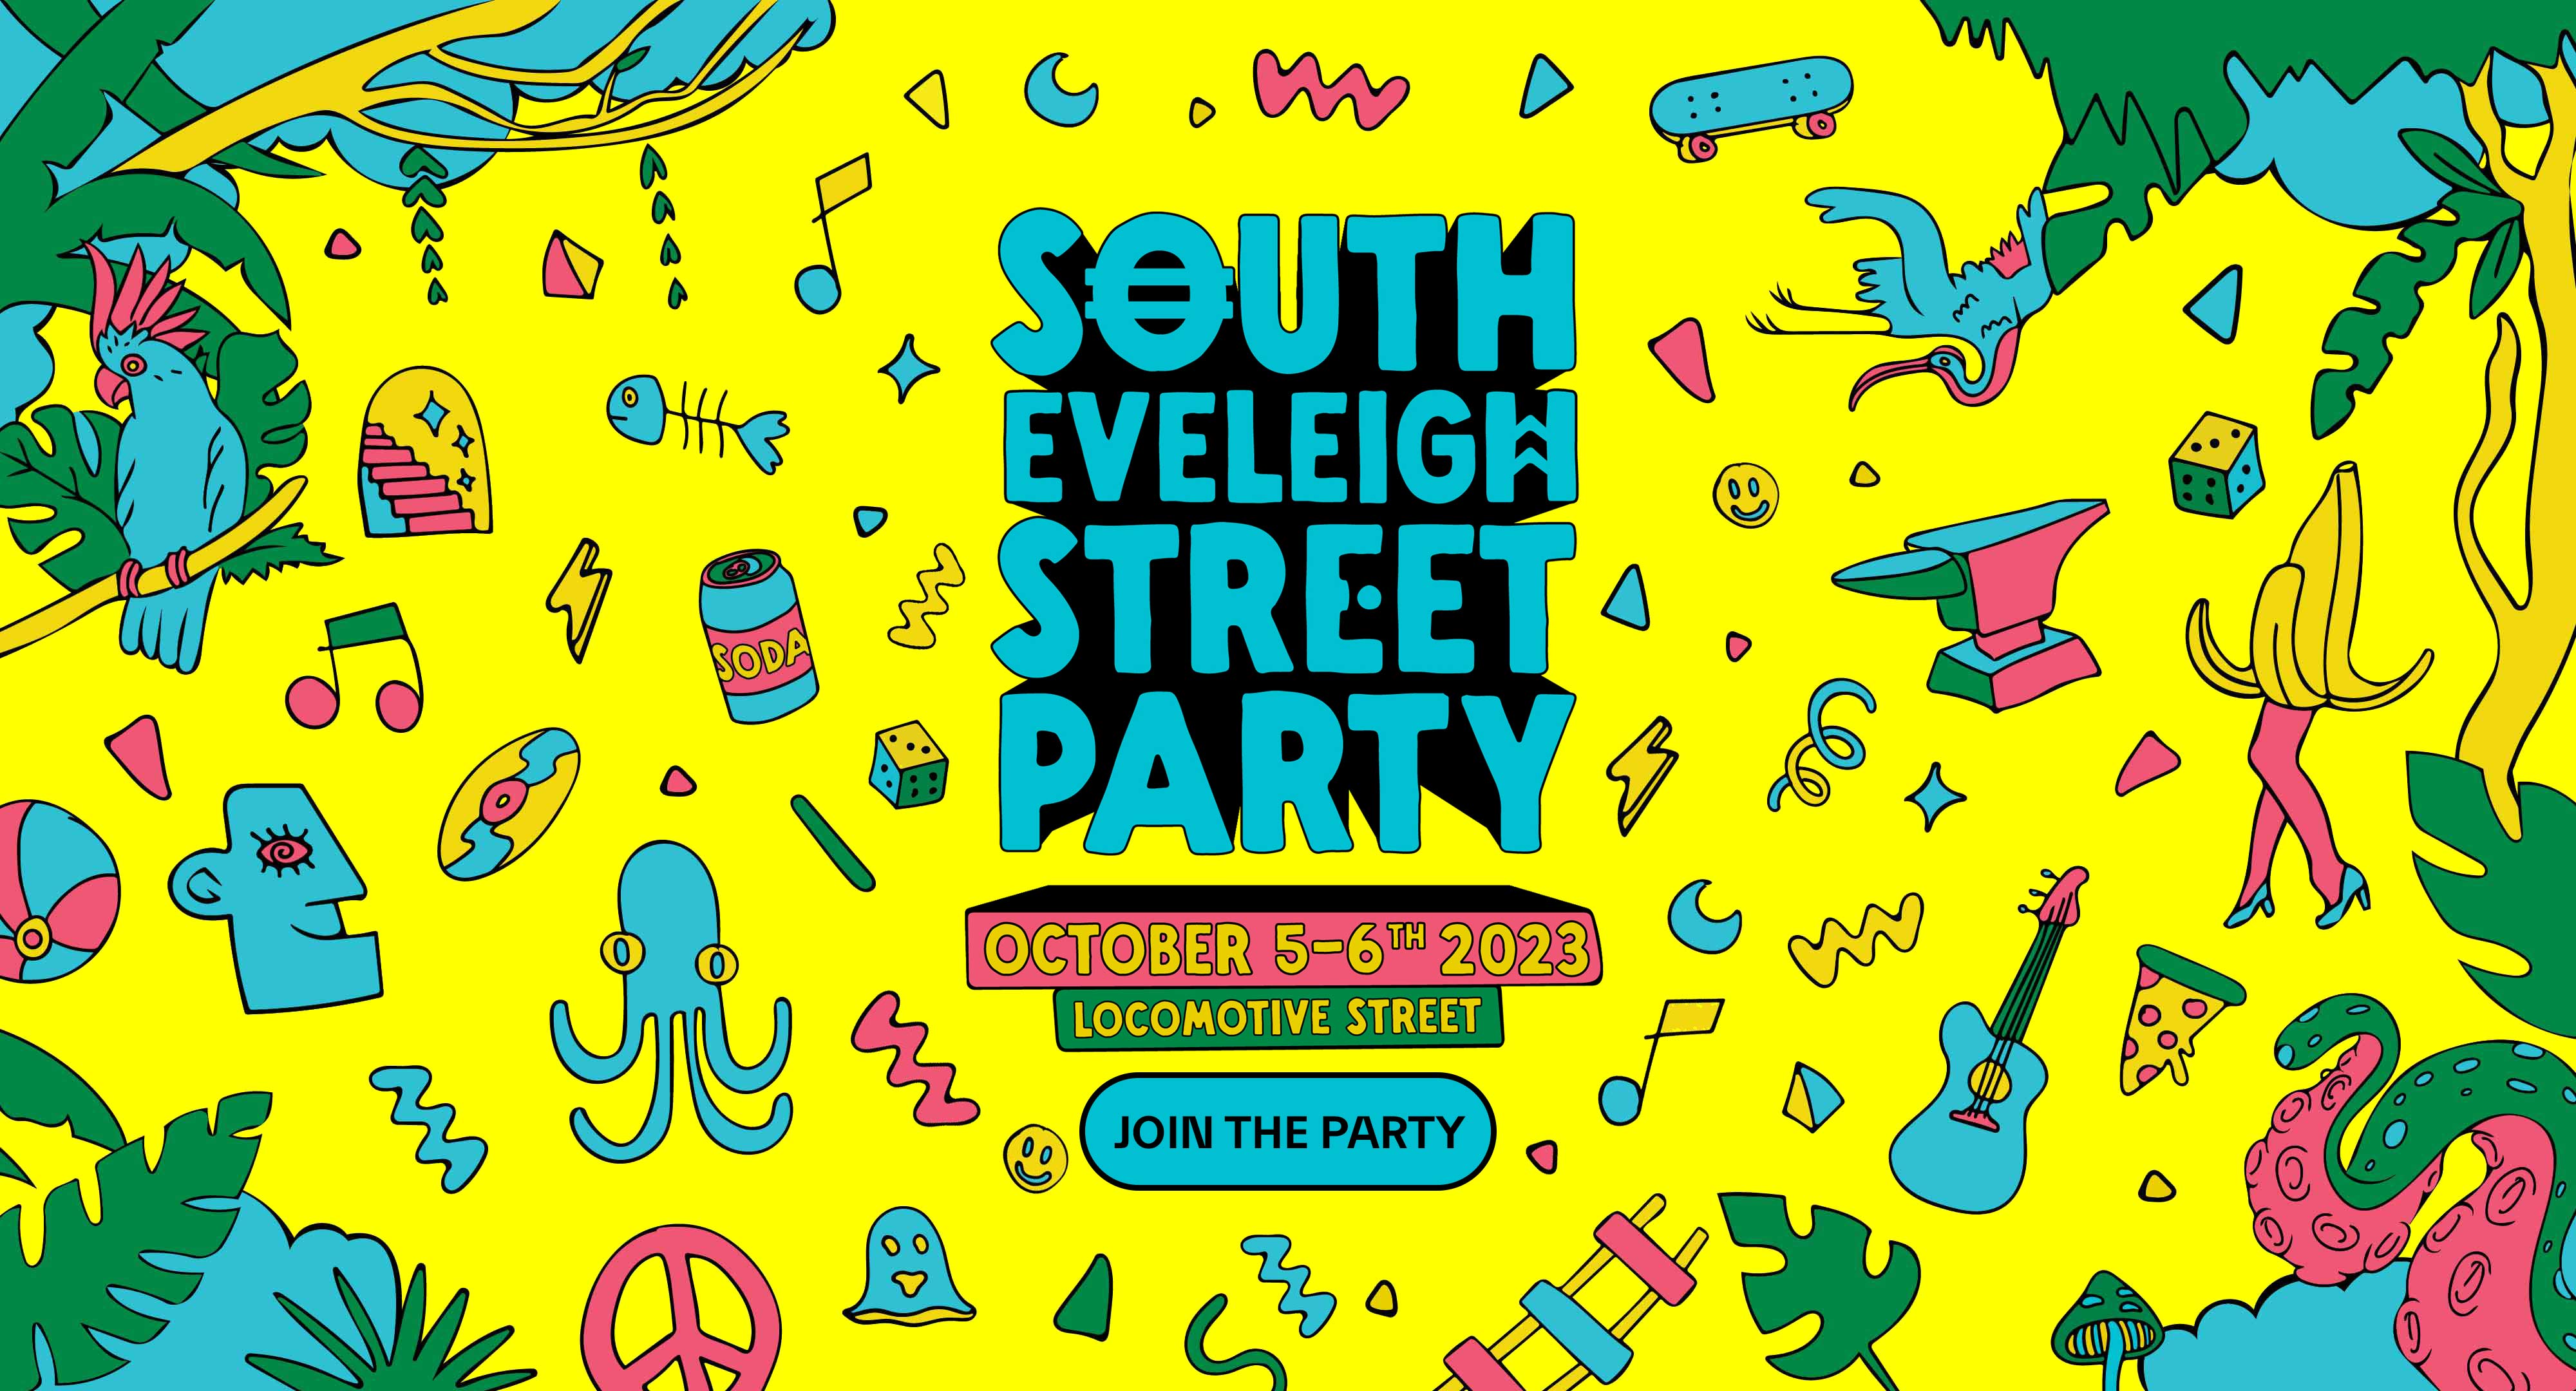 South Eveleigh Street Party